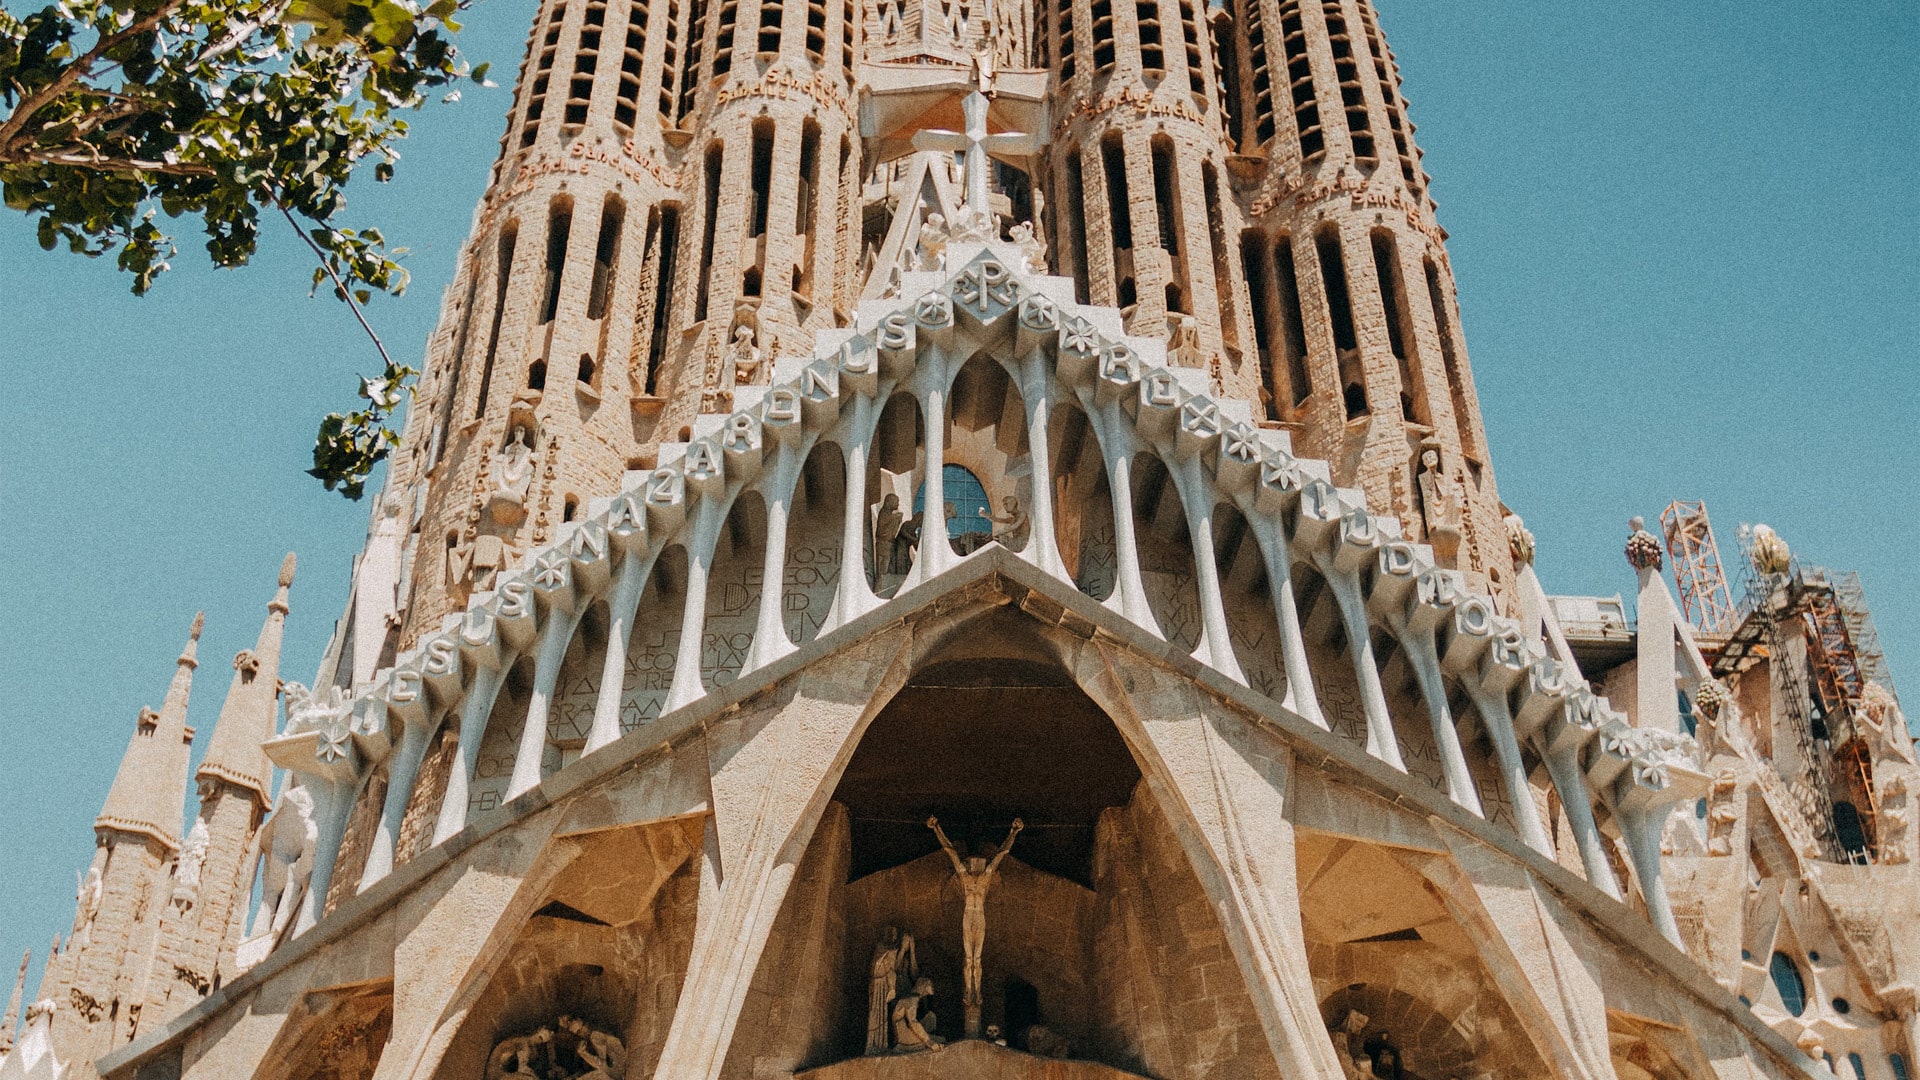 Die wunderbare Sagrada Familia von Antoni Gaudí in Spanien